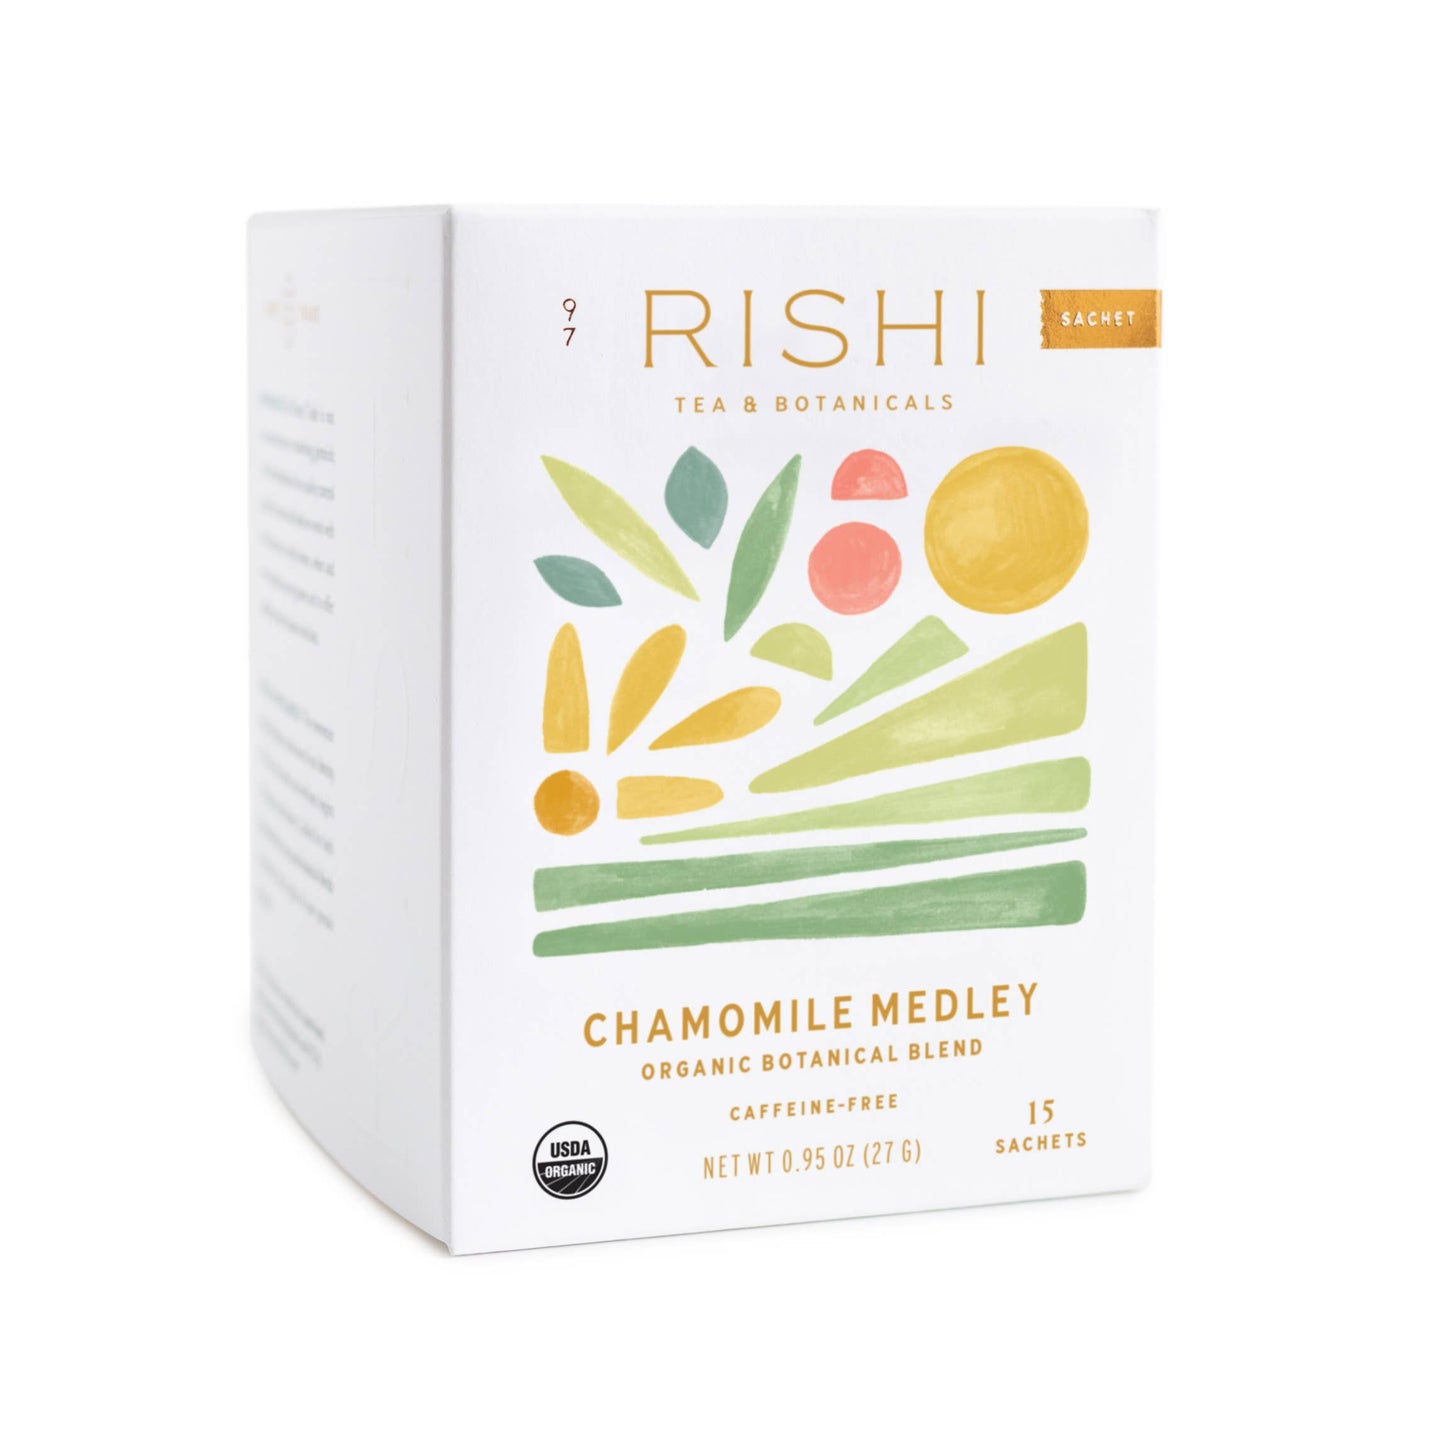 Rishi Tea & Botanicals - Chamomile Medley Organic Herbal Tea Sachets